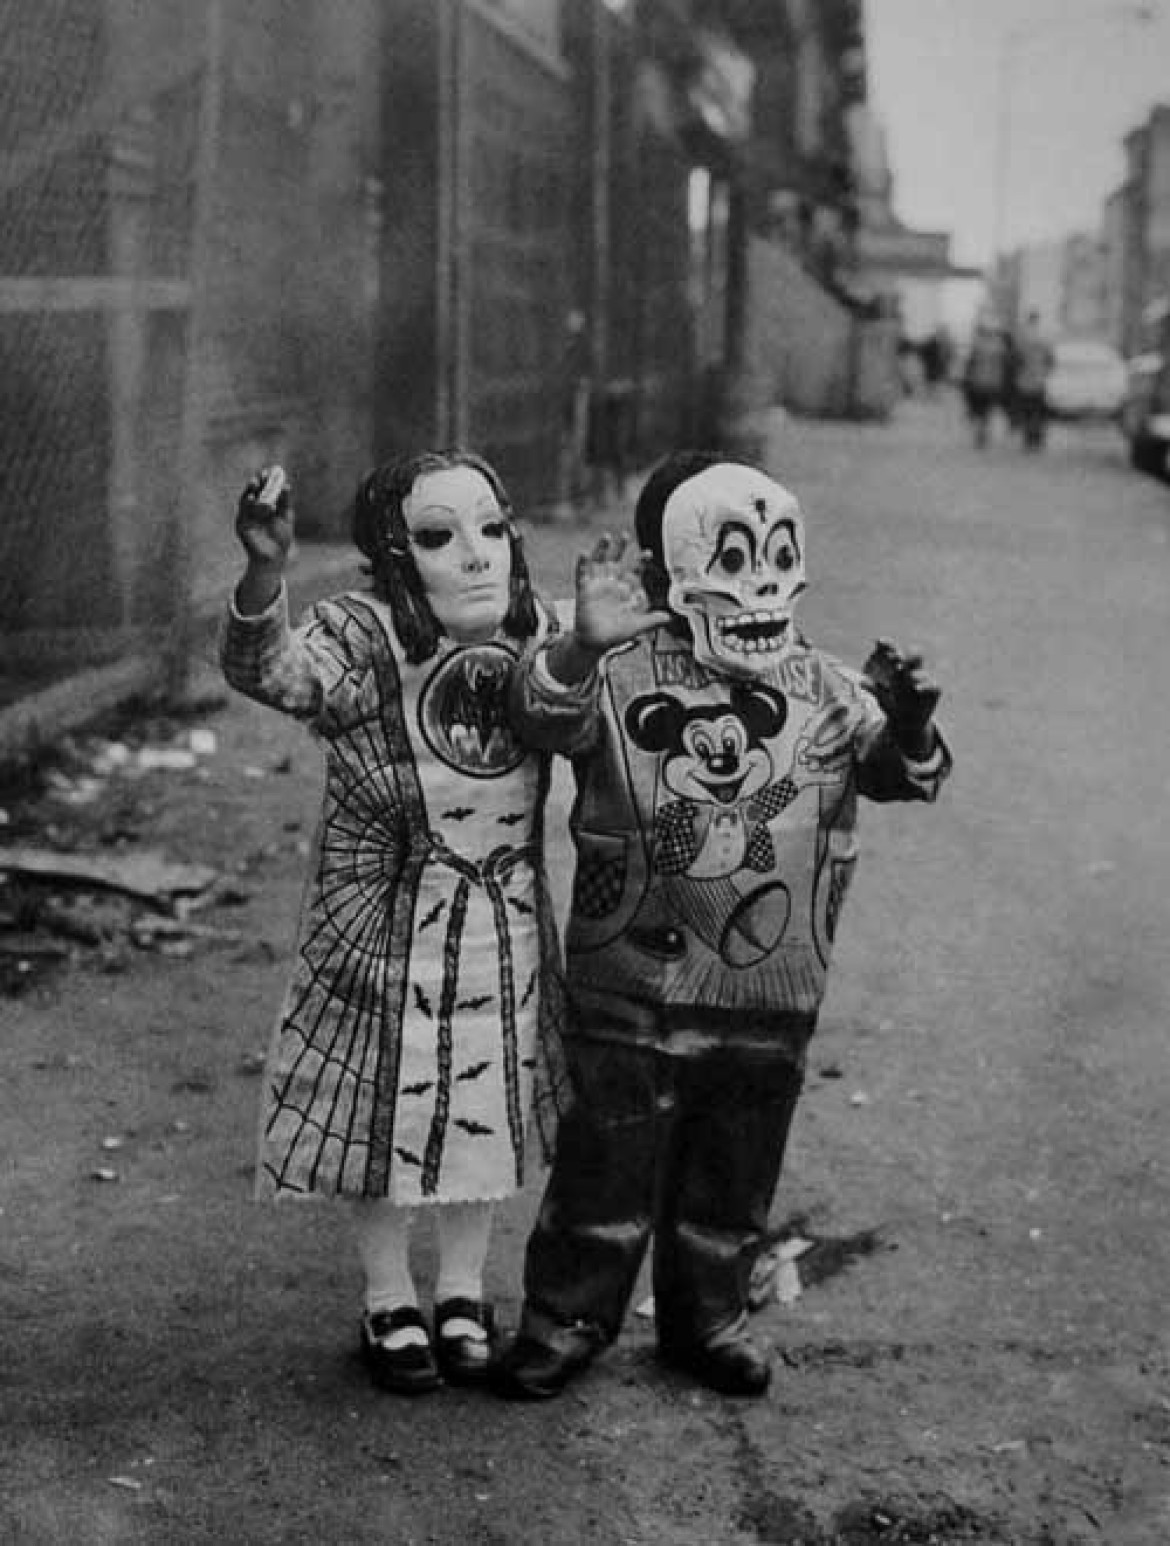 Fot. Arthur Tress, Masked Children, 110th Street